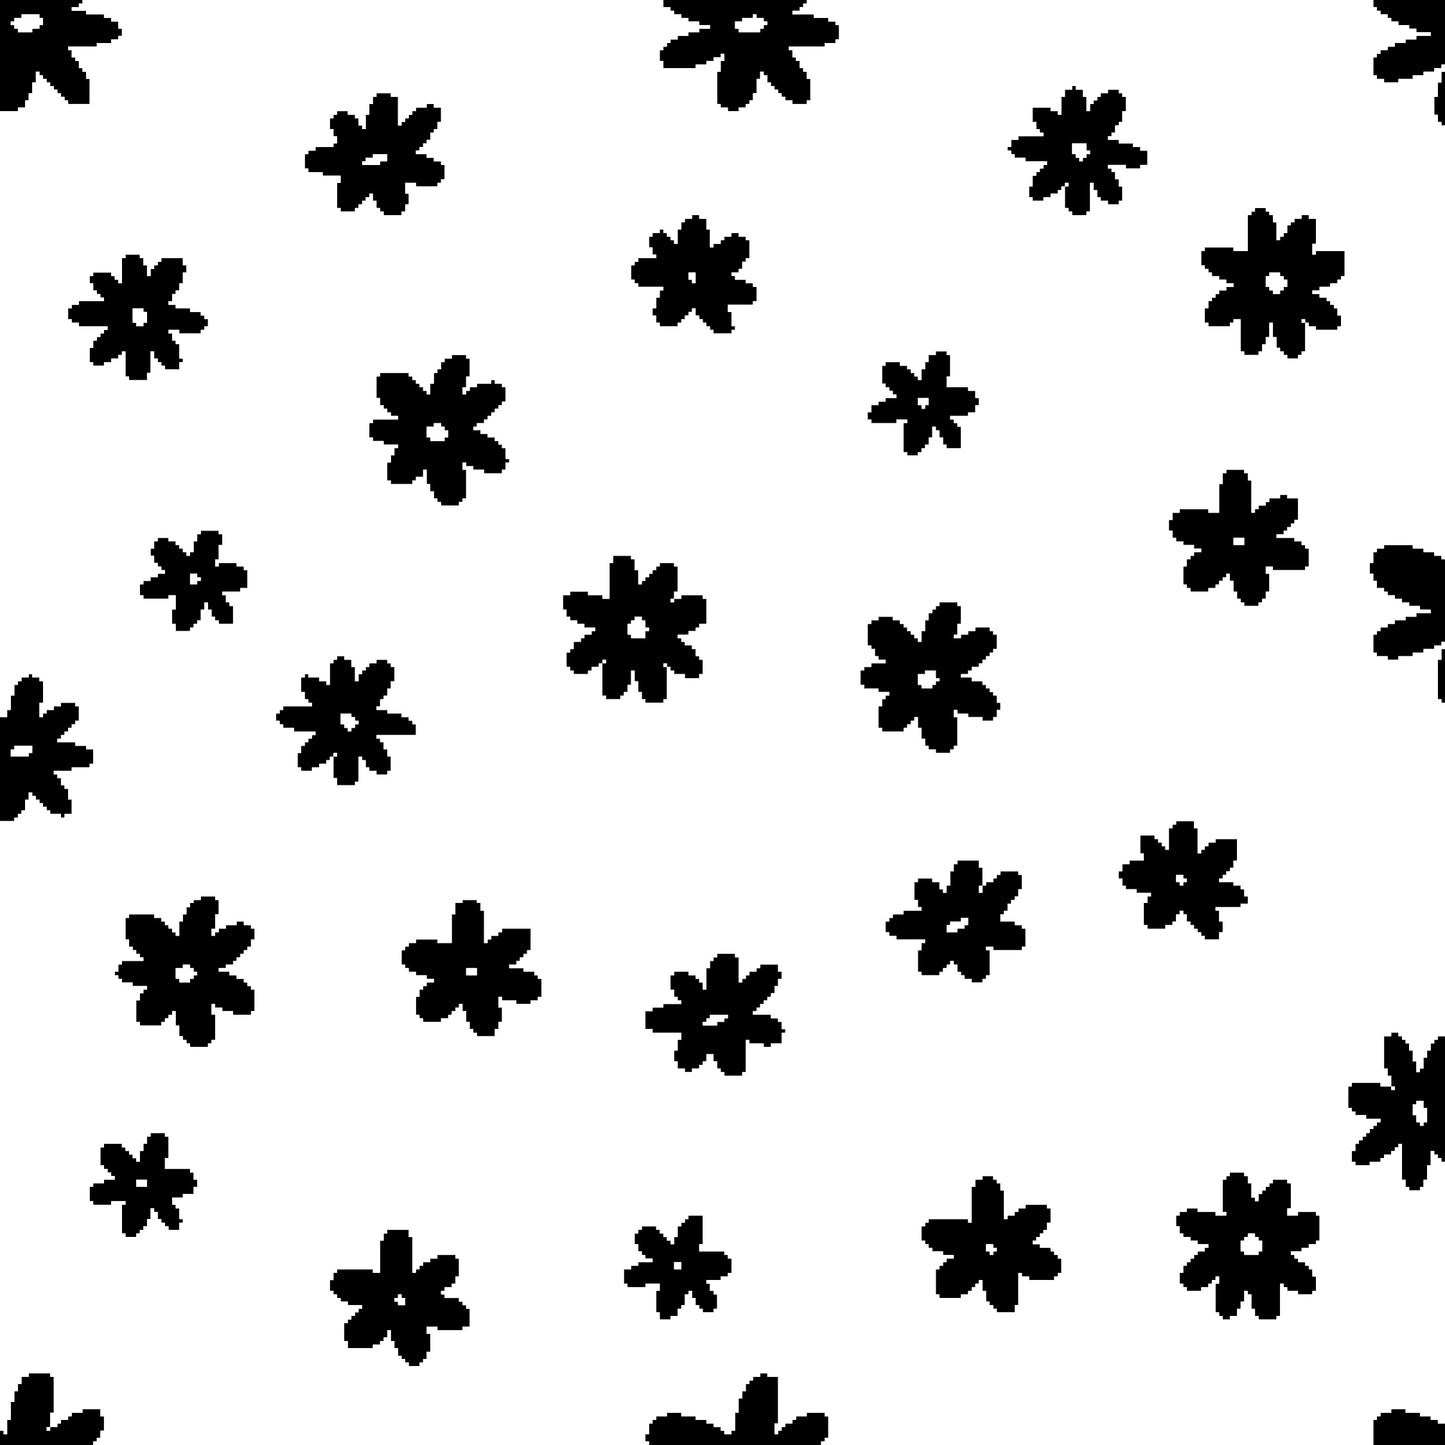 Daisy flower - wall window decal sticker pack